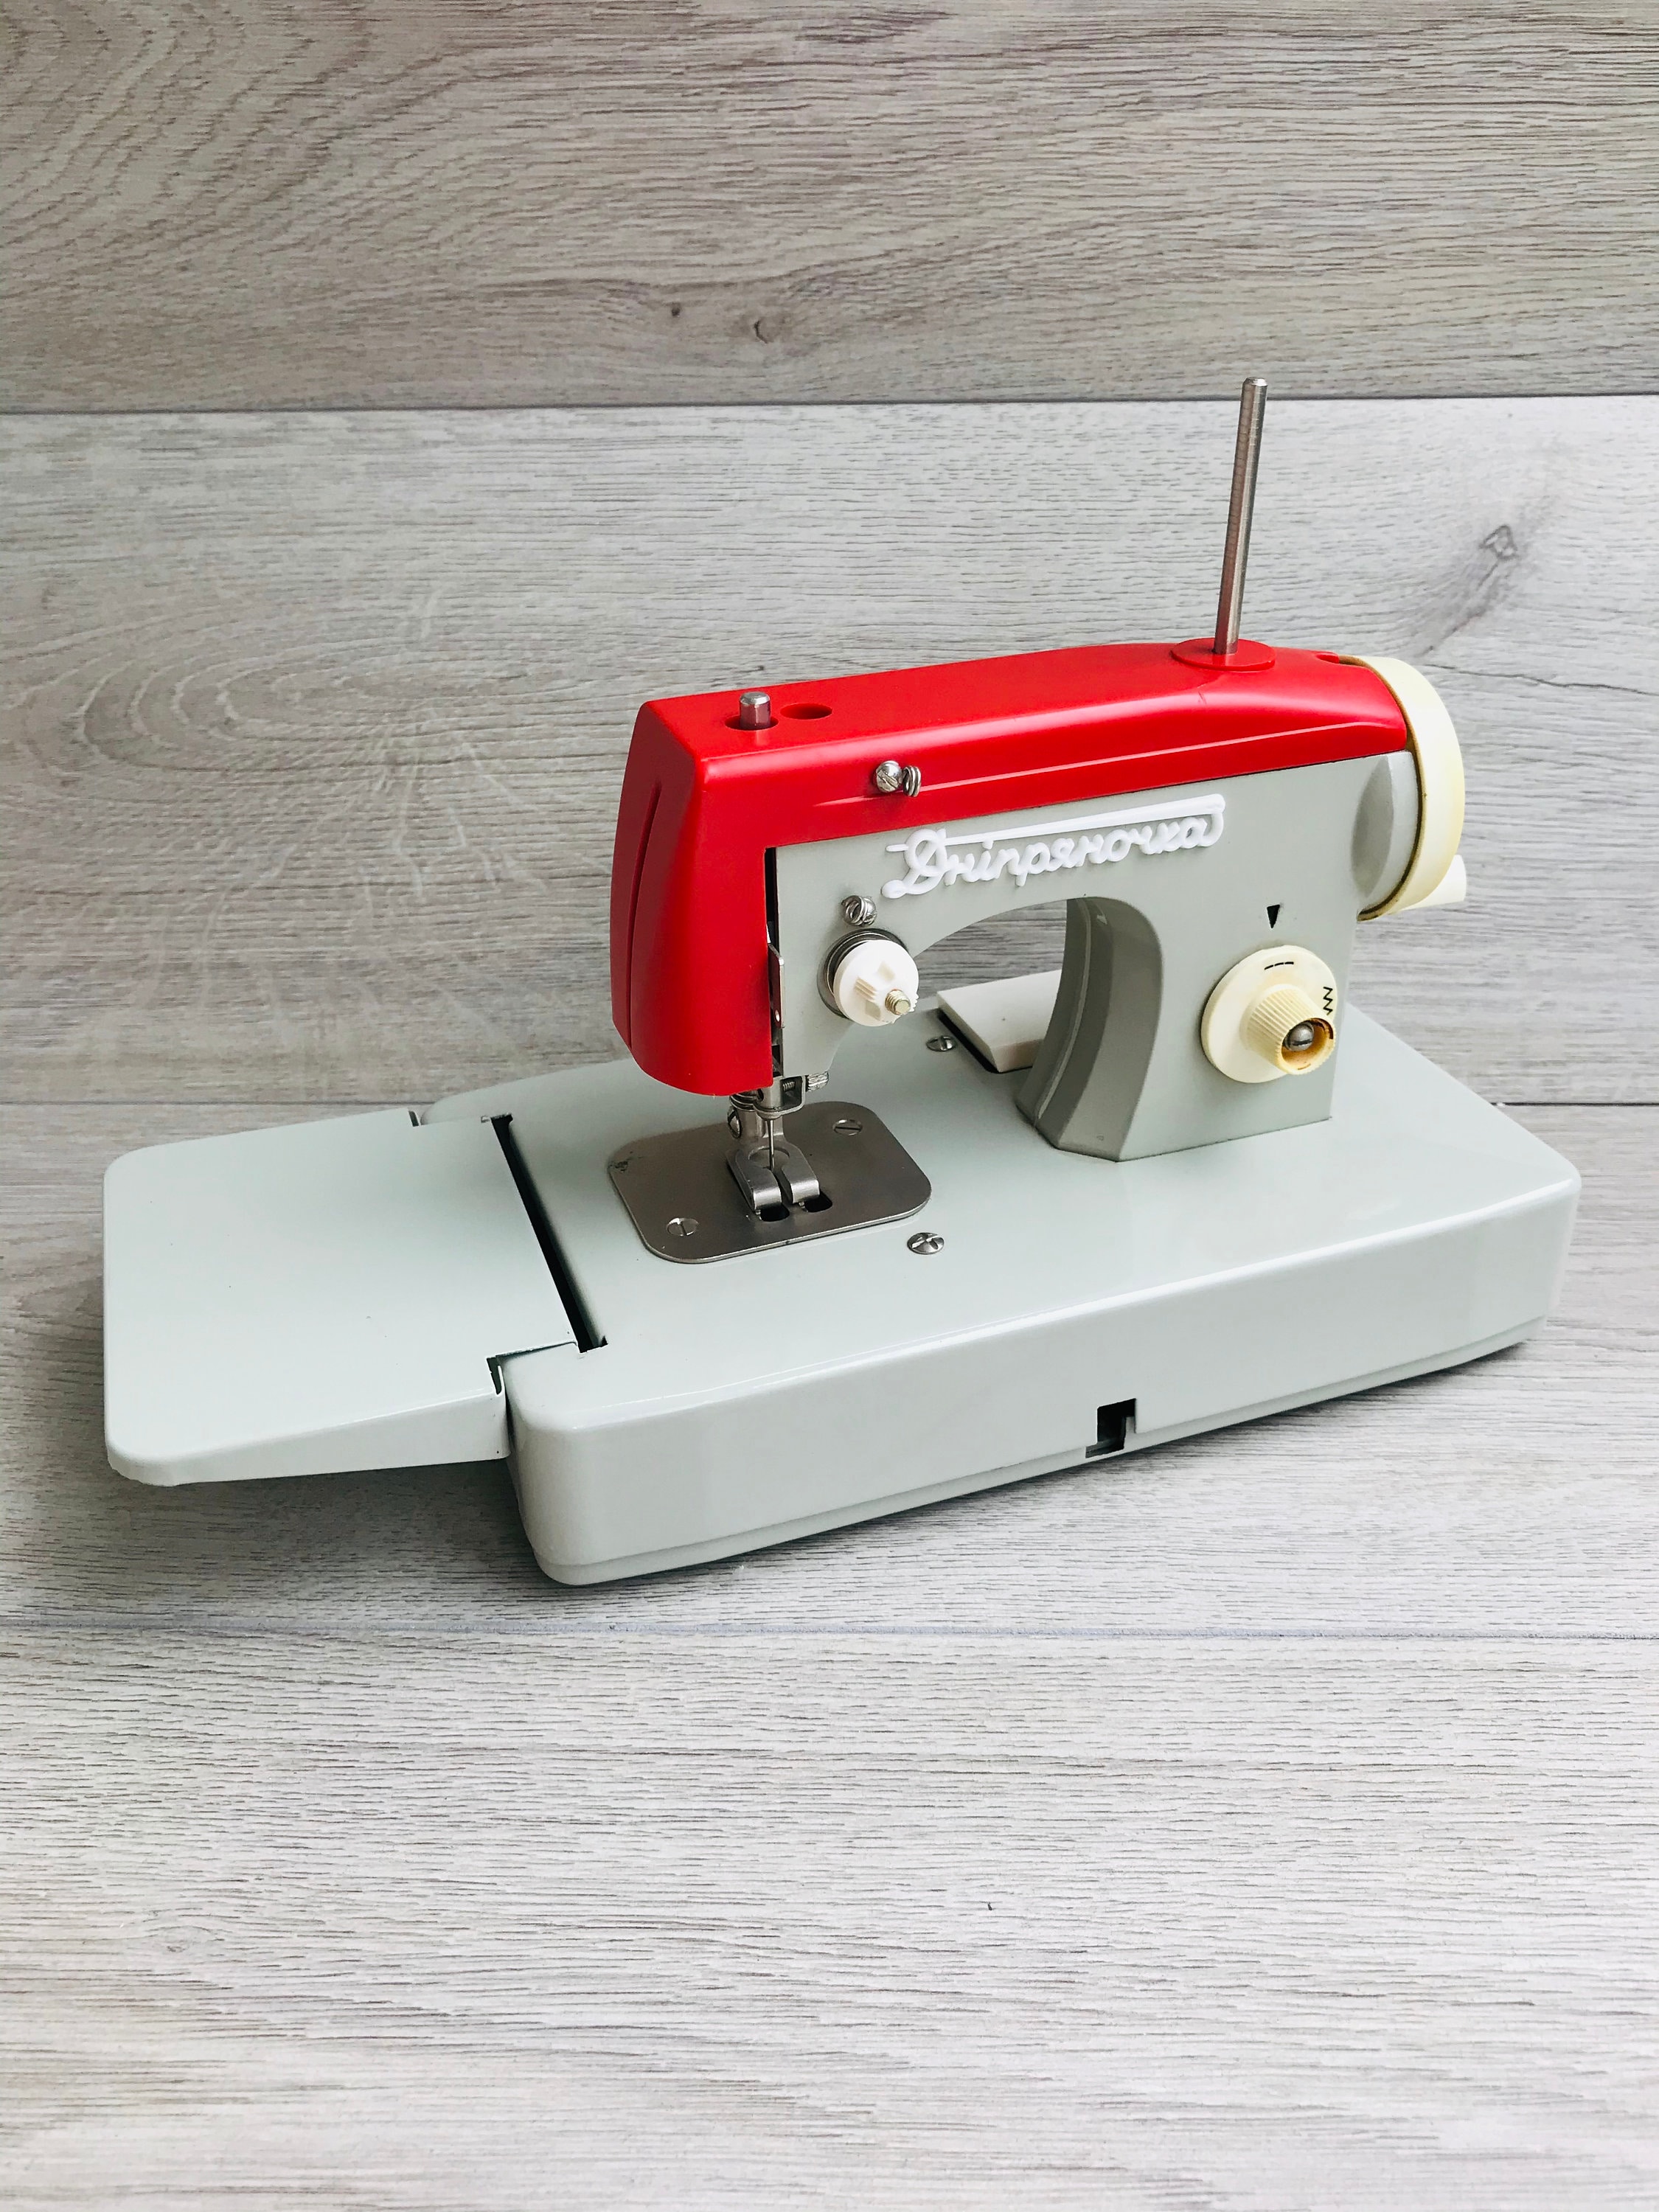 Sun Mini Stapler Model Sewing Machine -Color may vary